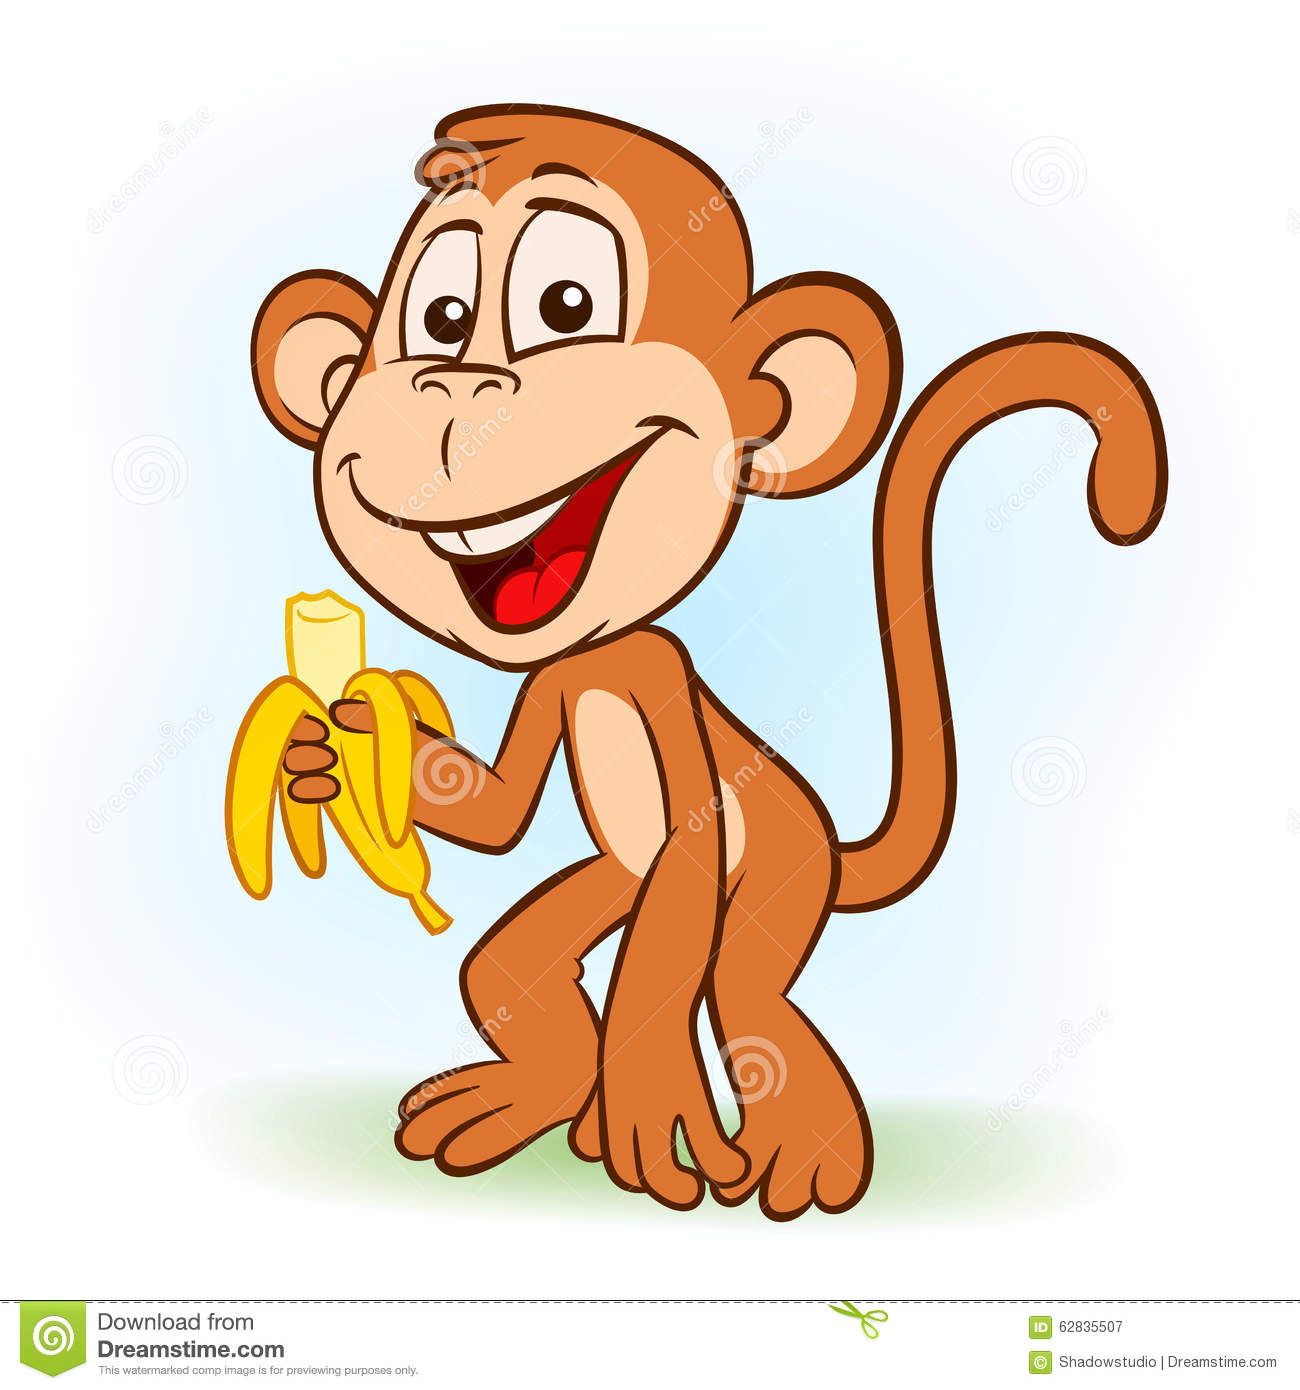 48 Meme Lucu Monyet Keren Dan Terbaru Kumpulan Gambar Meme Lucu